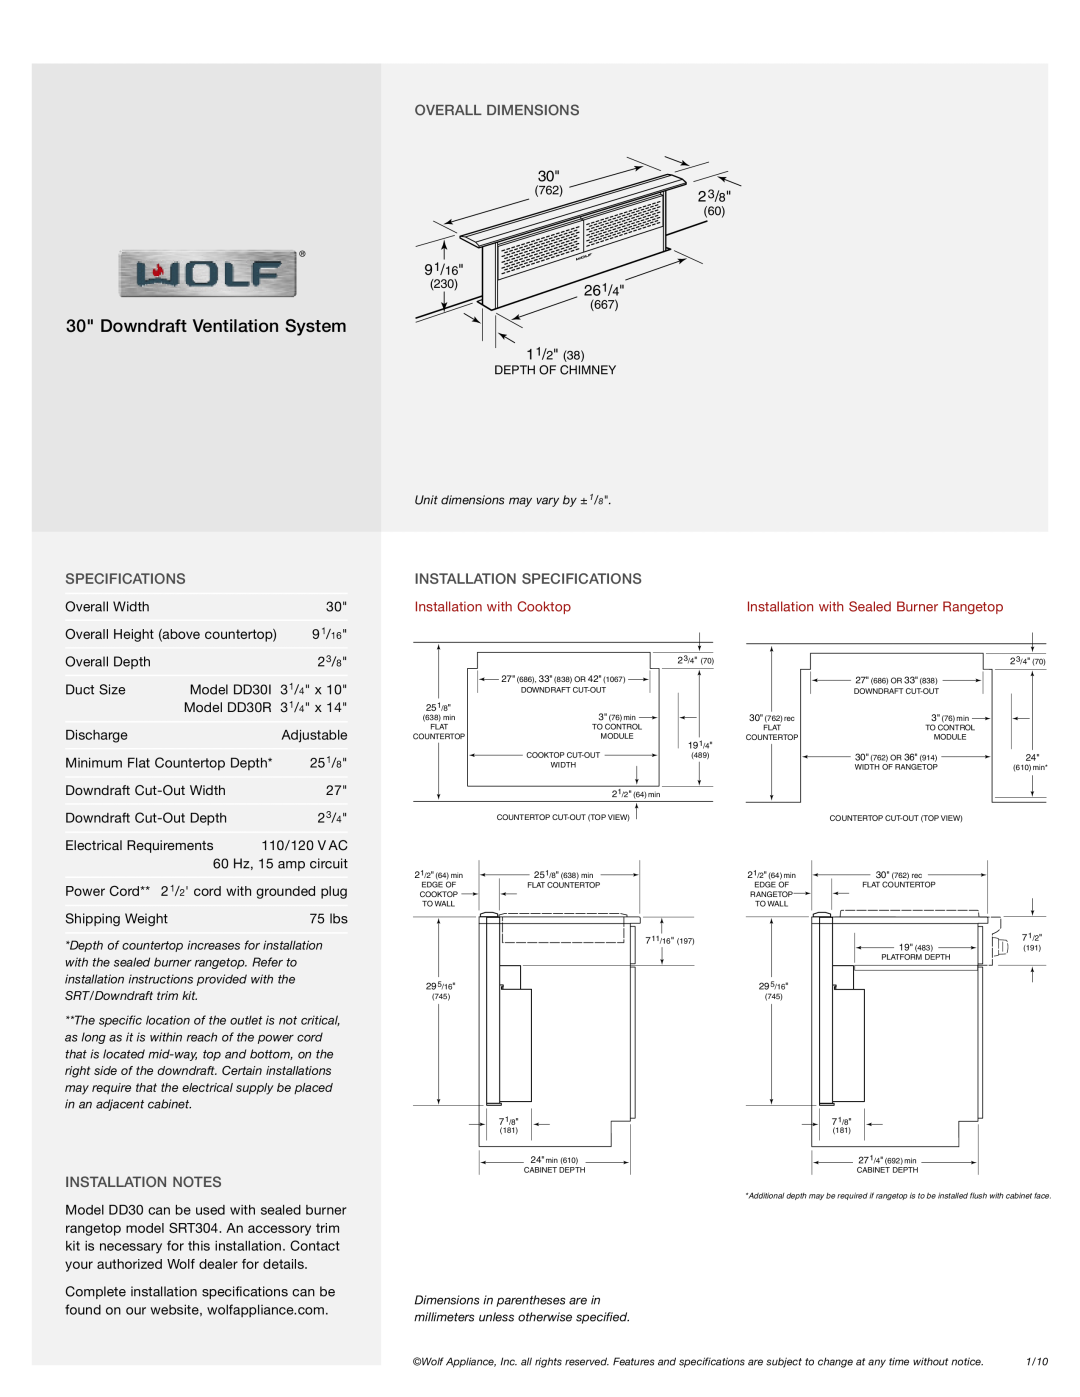 Wolf DD30I Overall Dimensions, Installation Specifications, Installation Notes, Downdraft Ventilation System, 91/16 